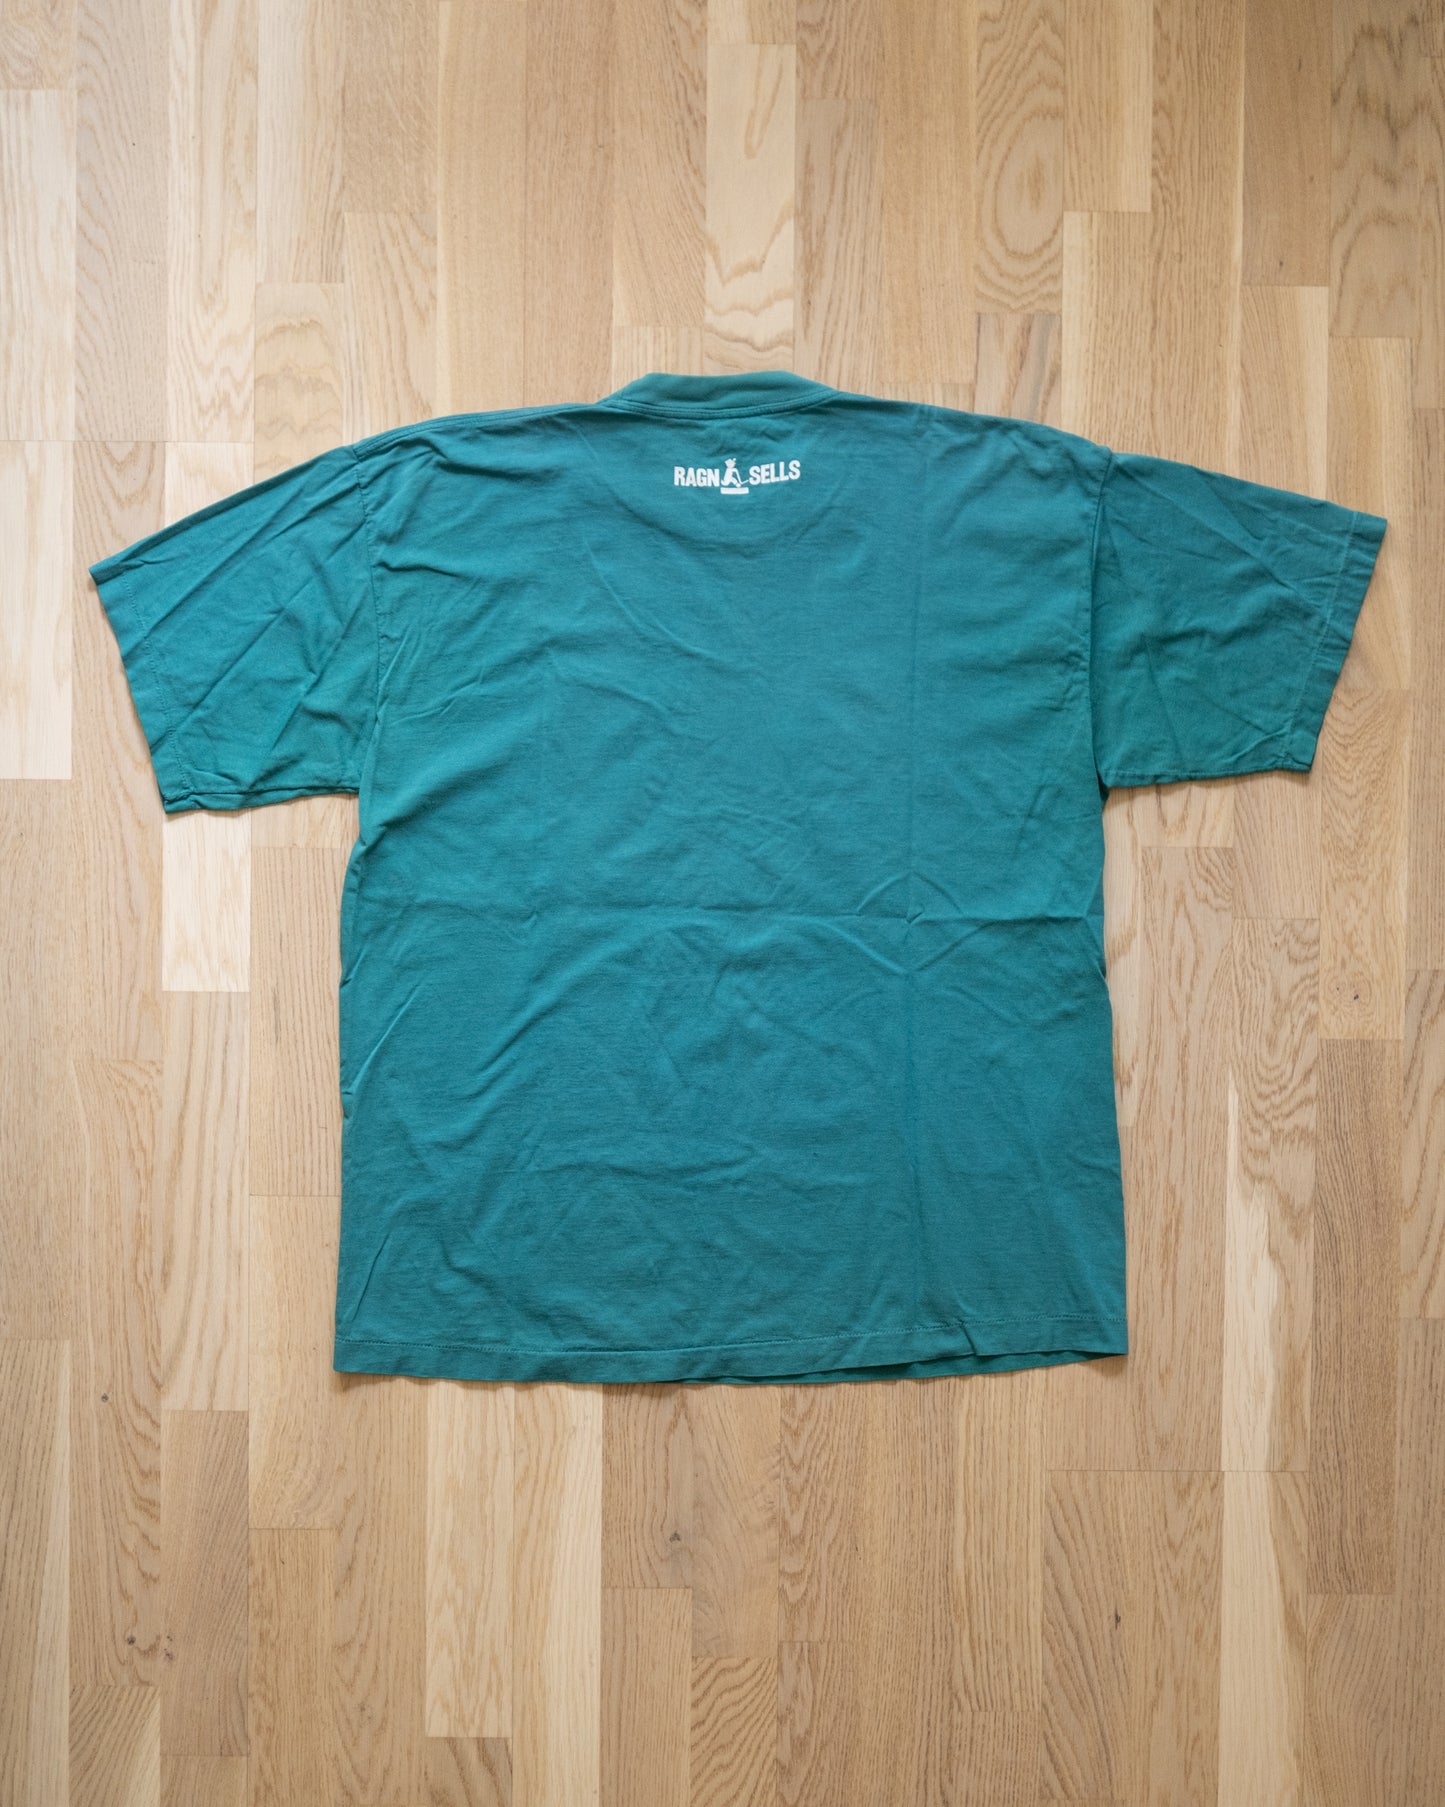 Ragn-Sells Vintage Single Stitch T-Shirt Size XL